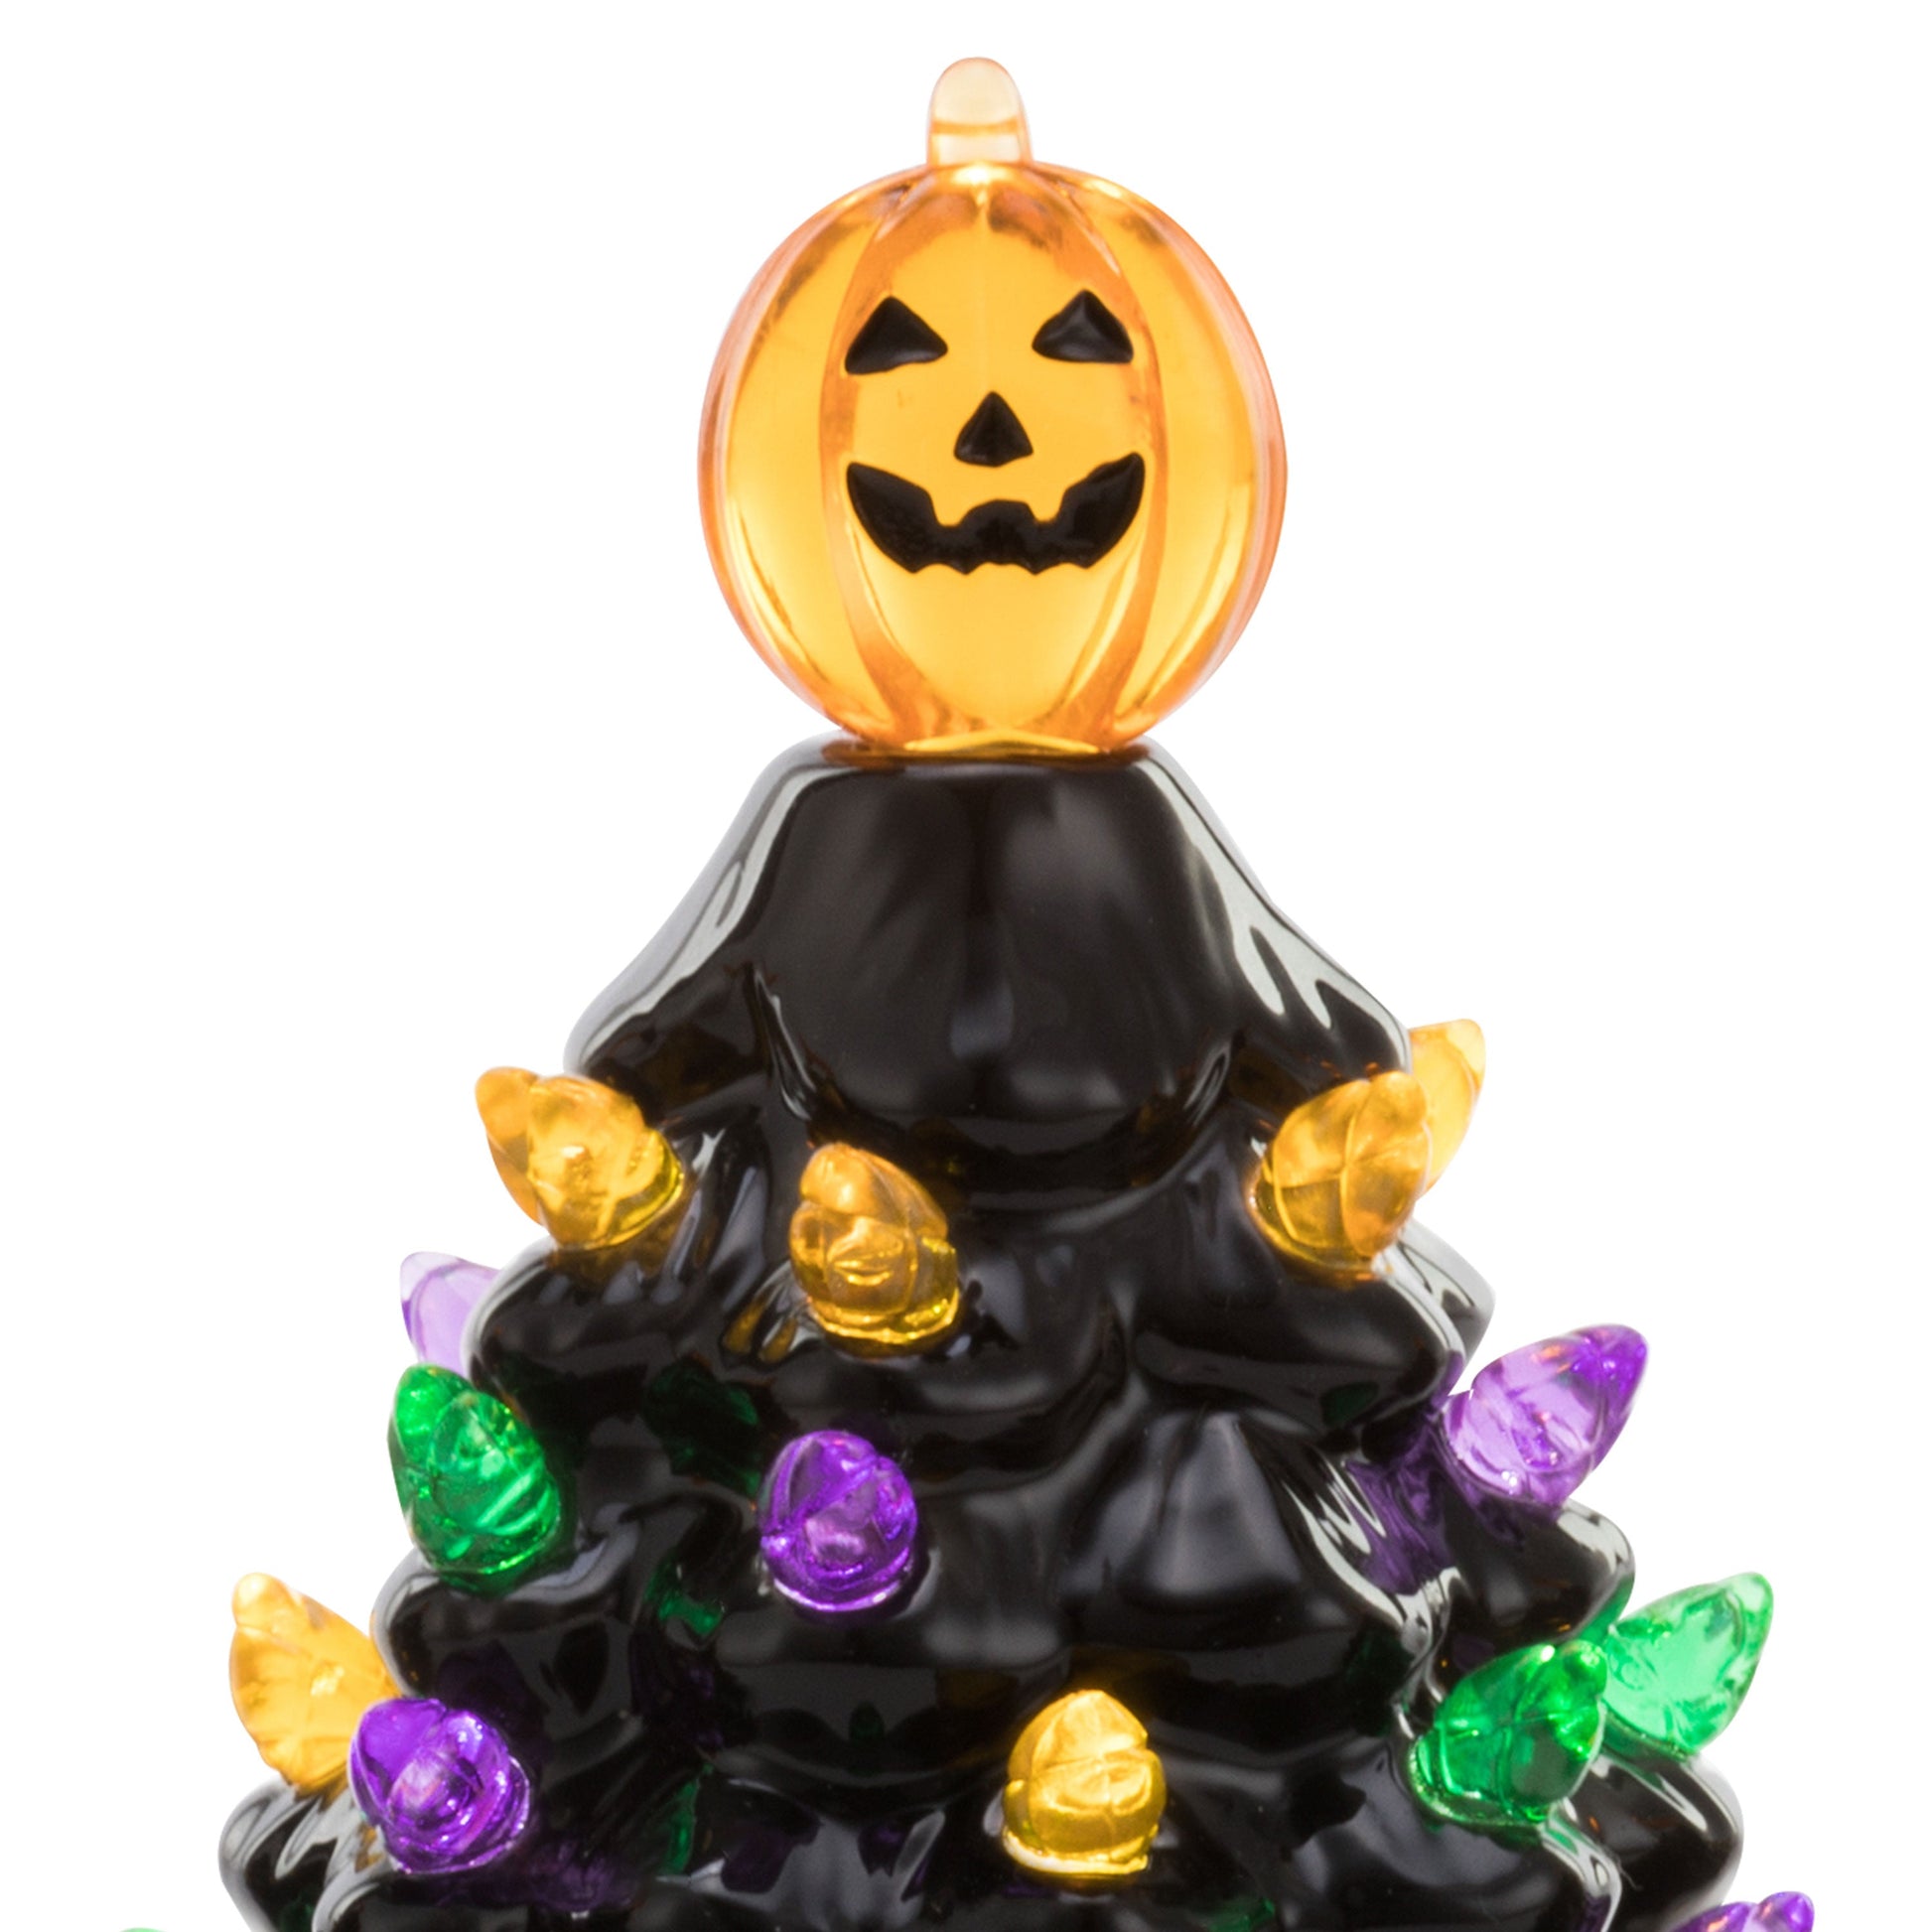 Set of 2 5.4" Halloween Trees - Black - Mr. Christmas